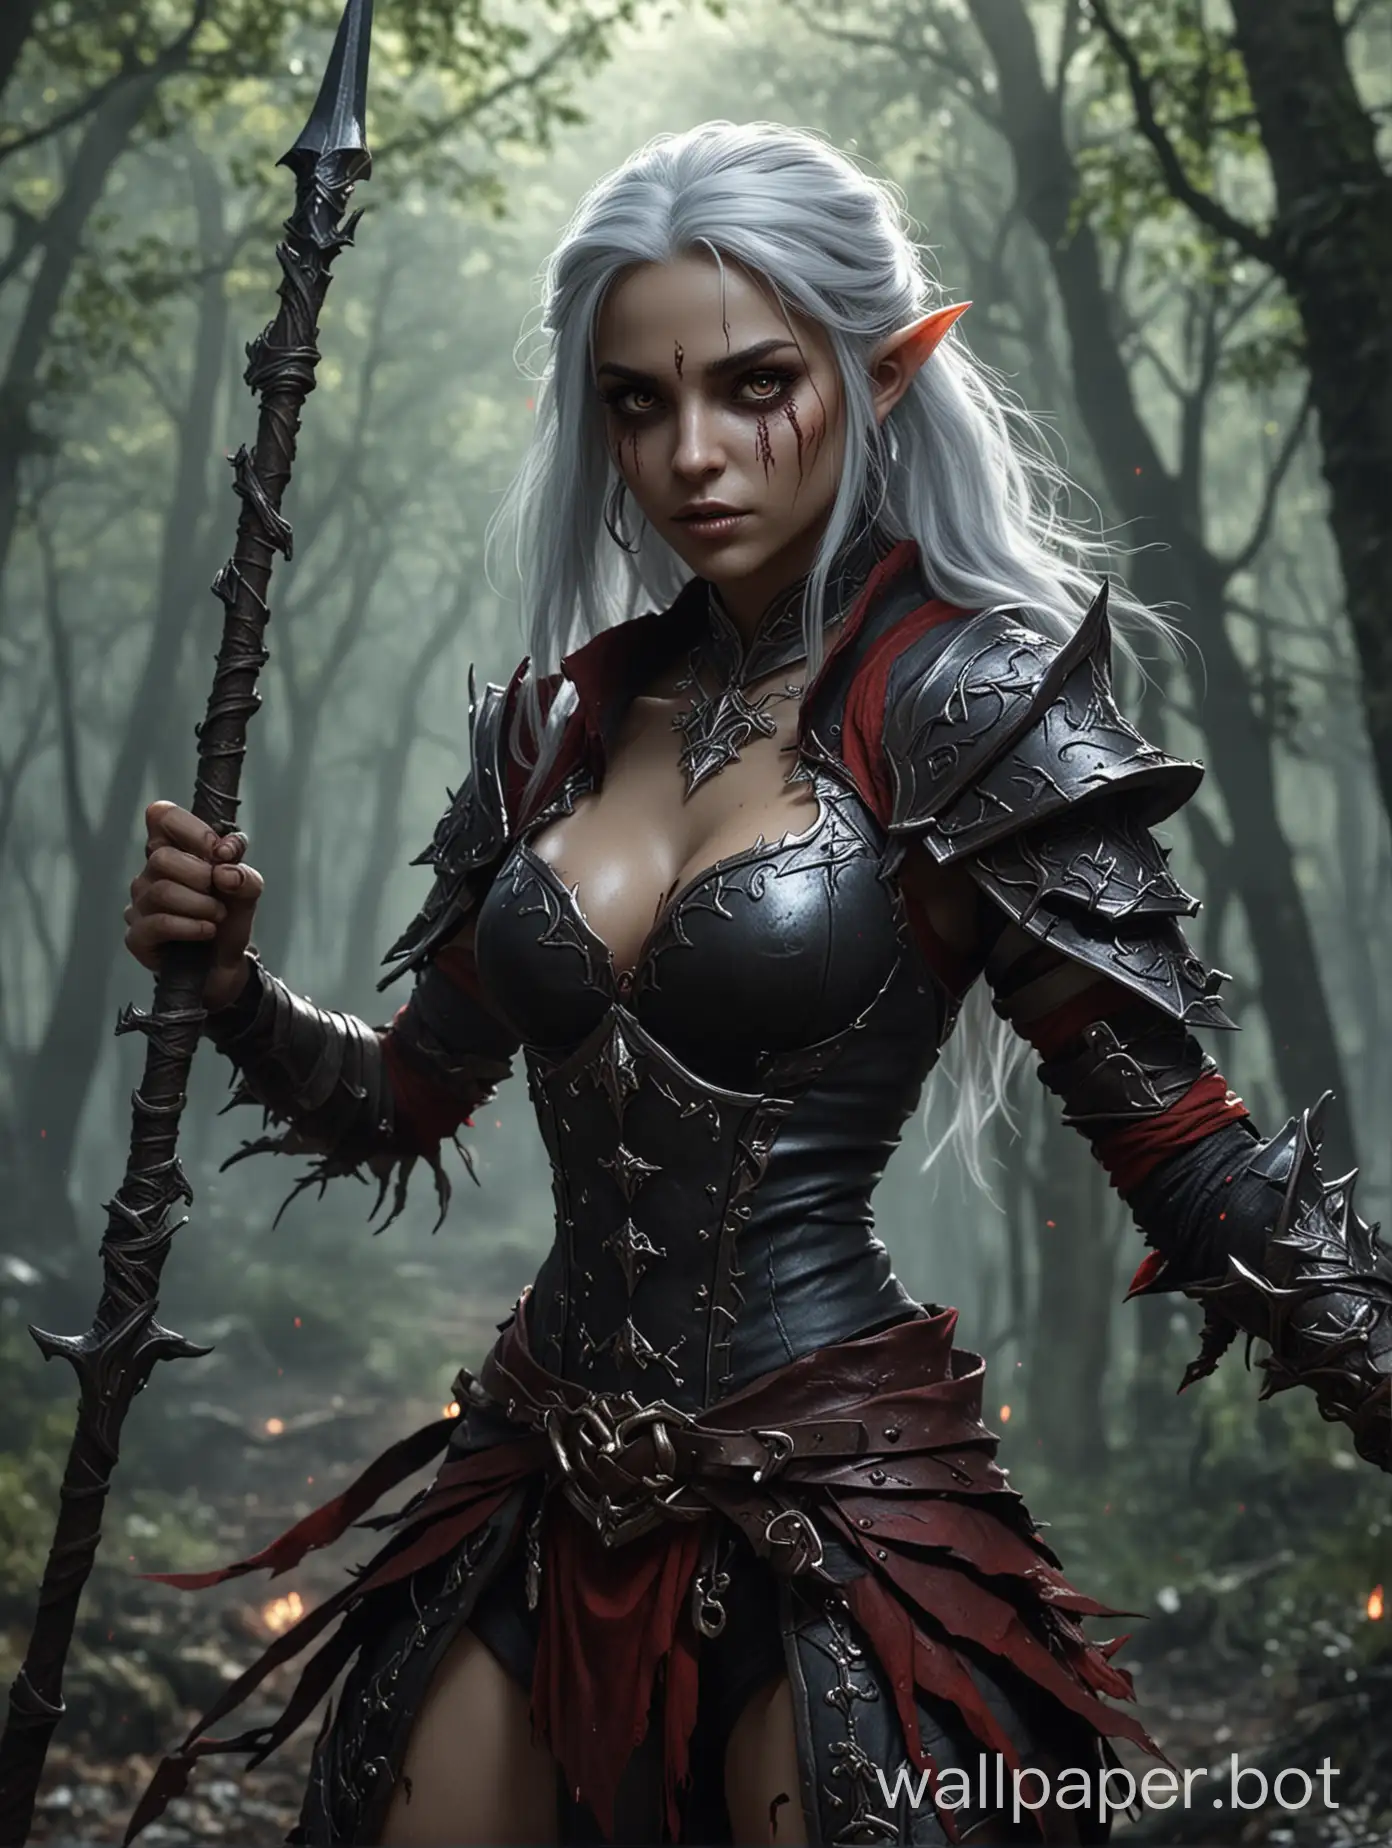 Shadowheart beautiful woman, Mintar warrior beautiful woman dark elf, magician magic blood, battle in the forest Goblins Sorcerers 4k detail